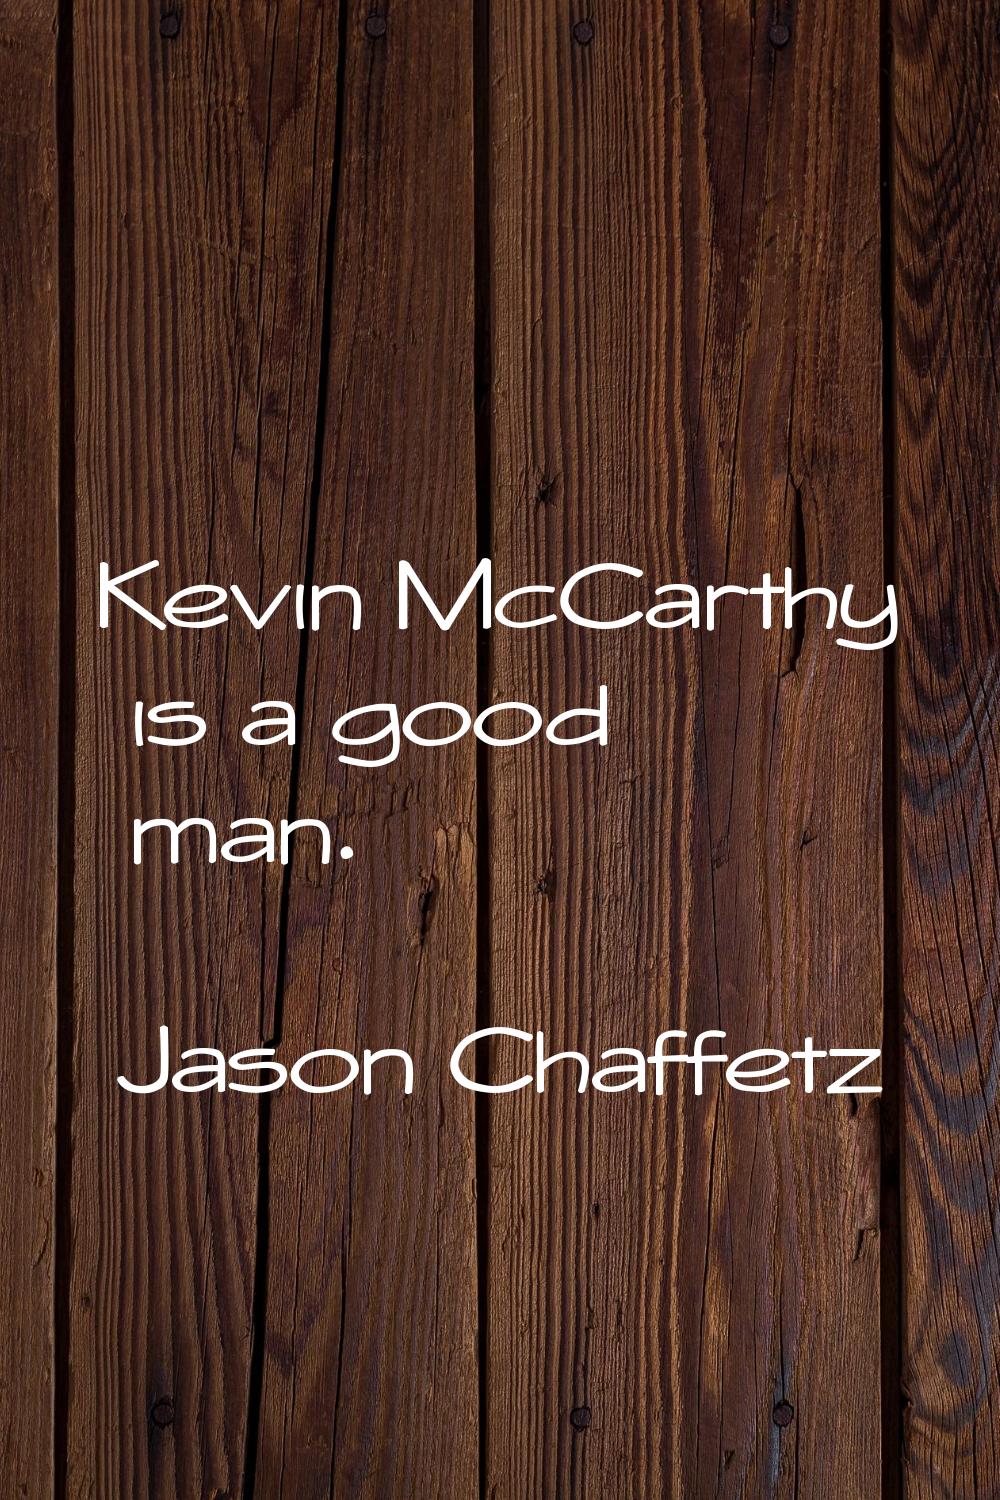 Kevin McCarthy is a good man.